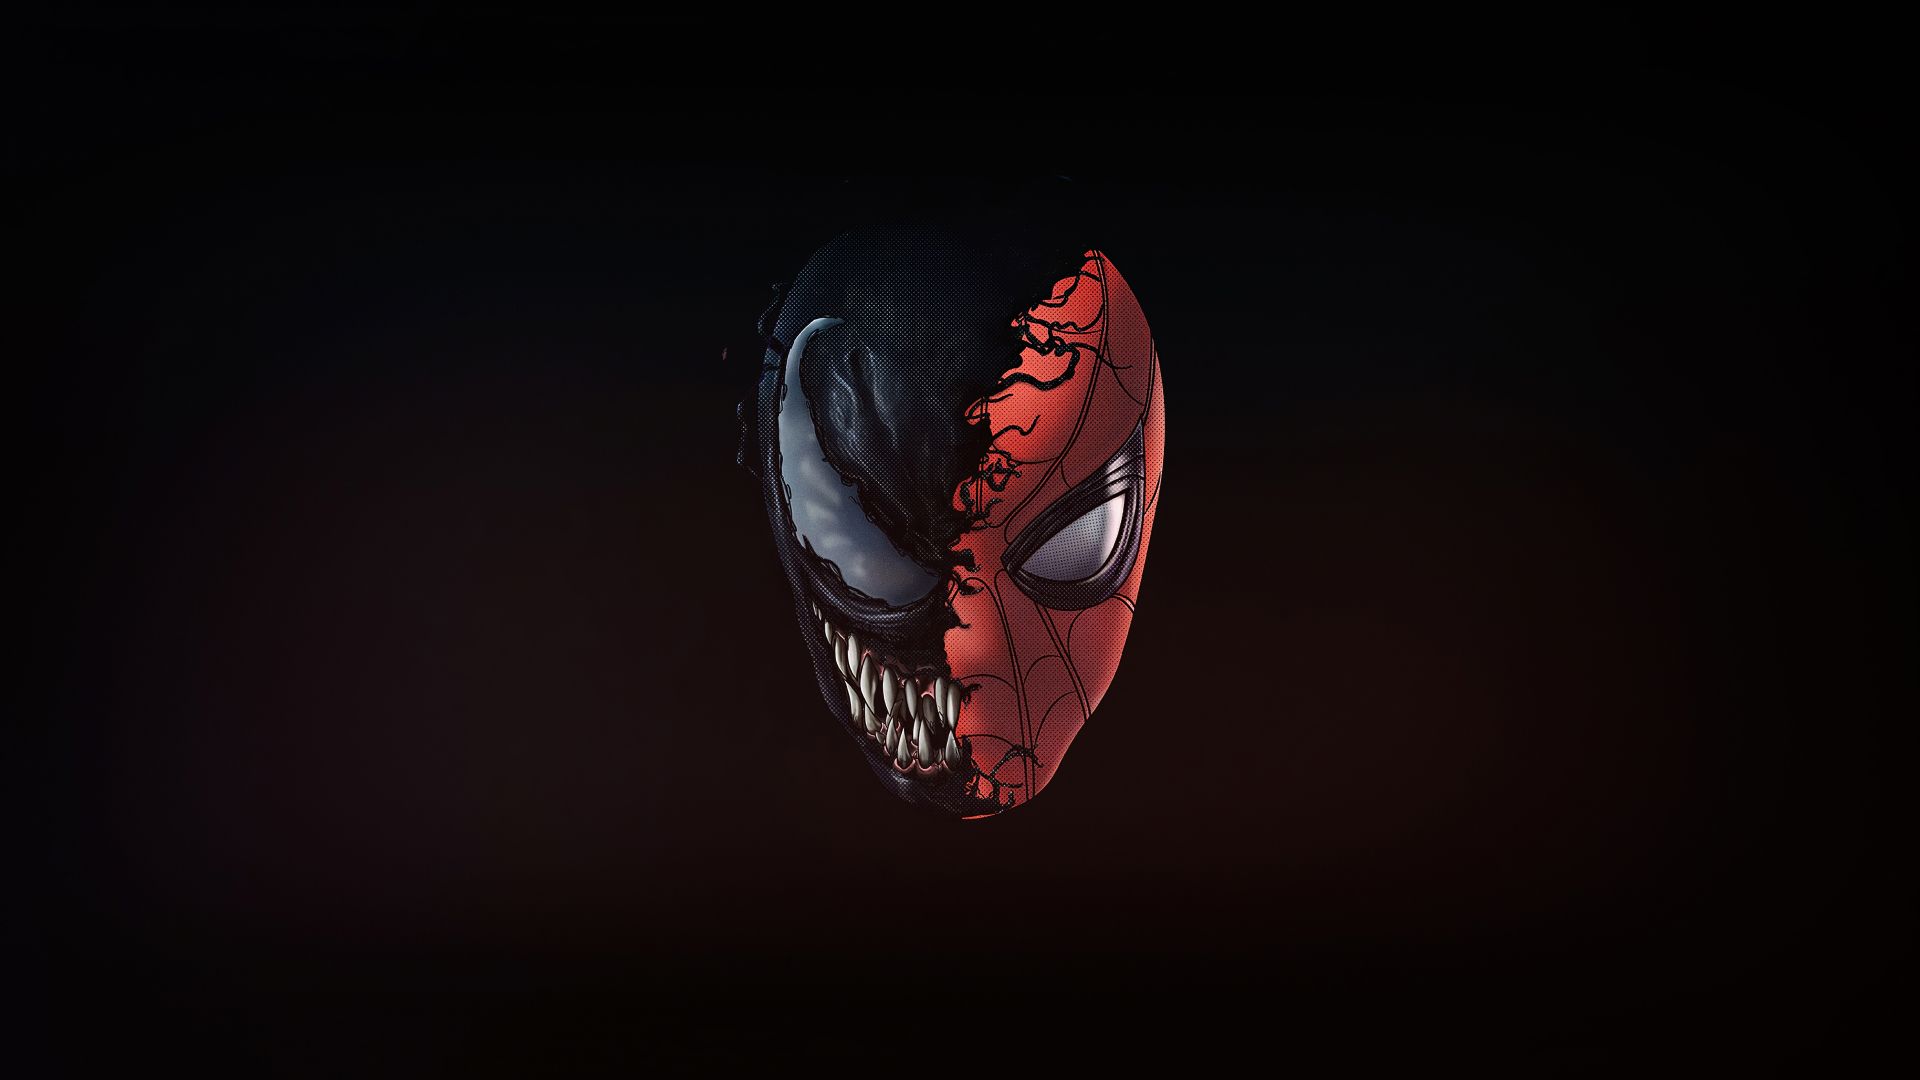 Spider Man and Venom 1080P Laptop Full HD Wallpaper, HD Minimalist 4K Wallpaper, Image, Photo and Background